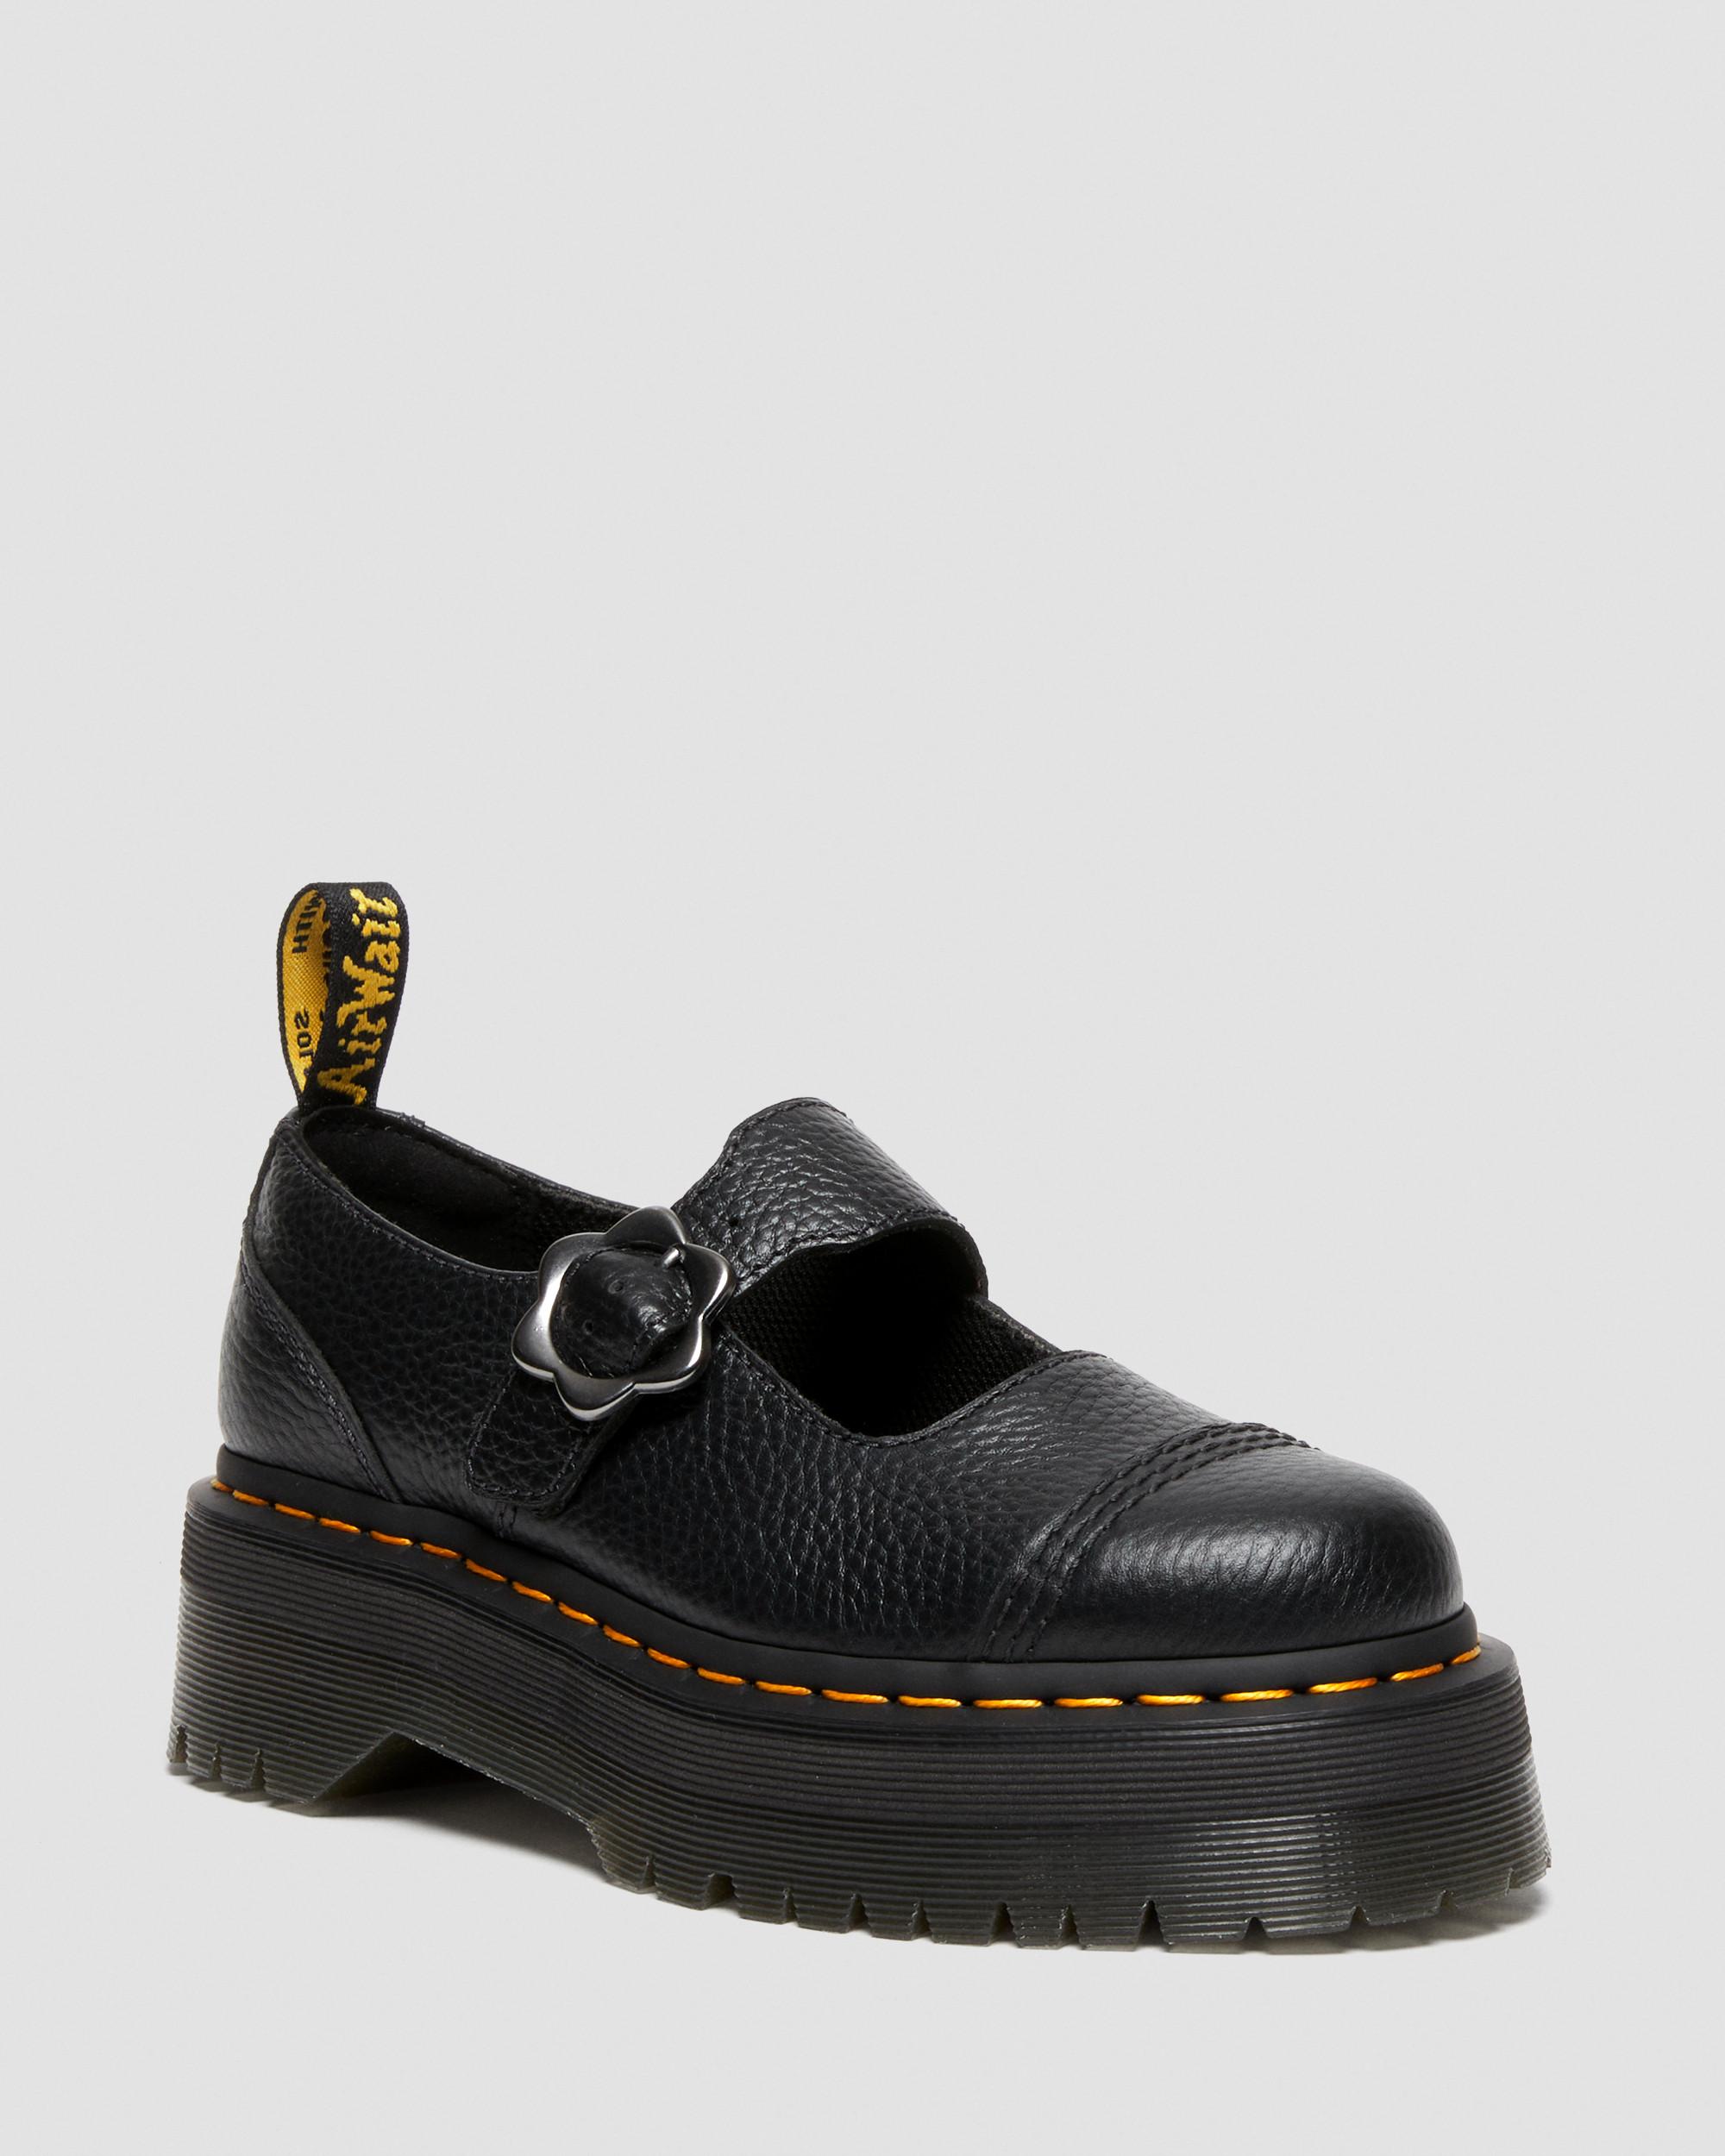 Addina Flower Buckle Leather Platform Shoes in Black